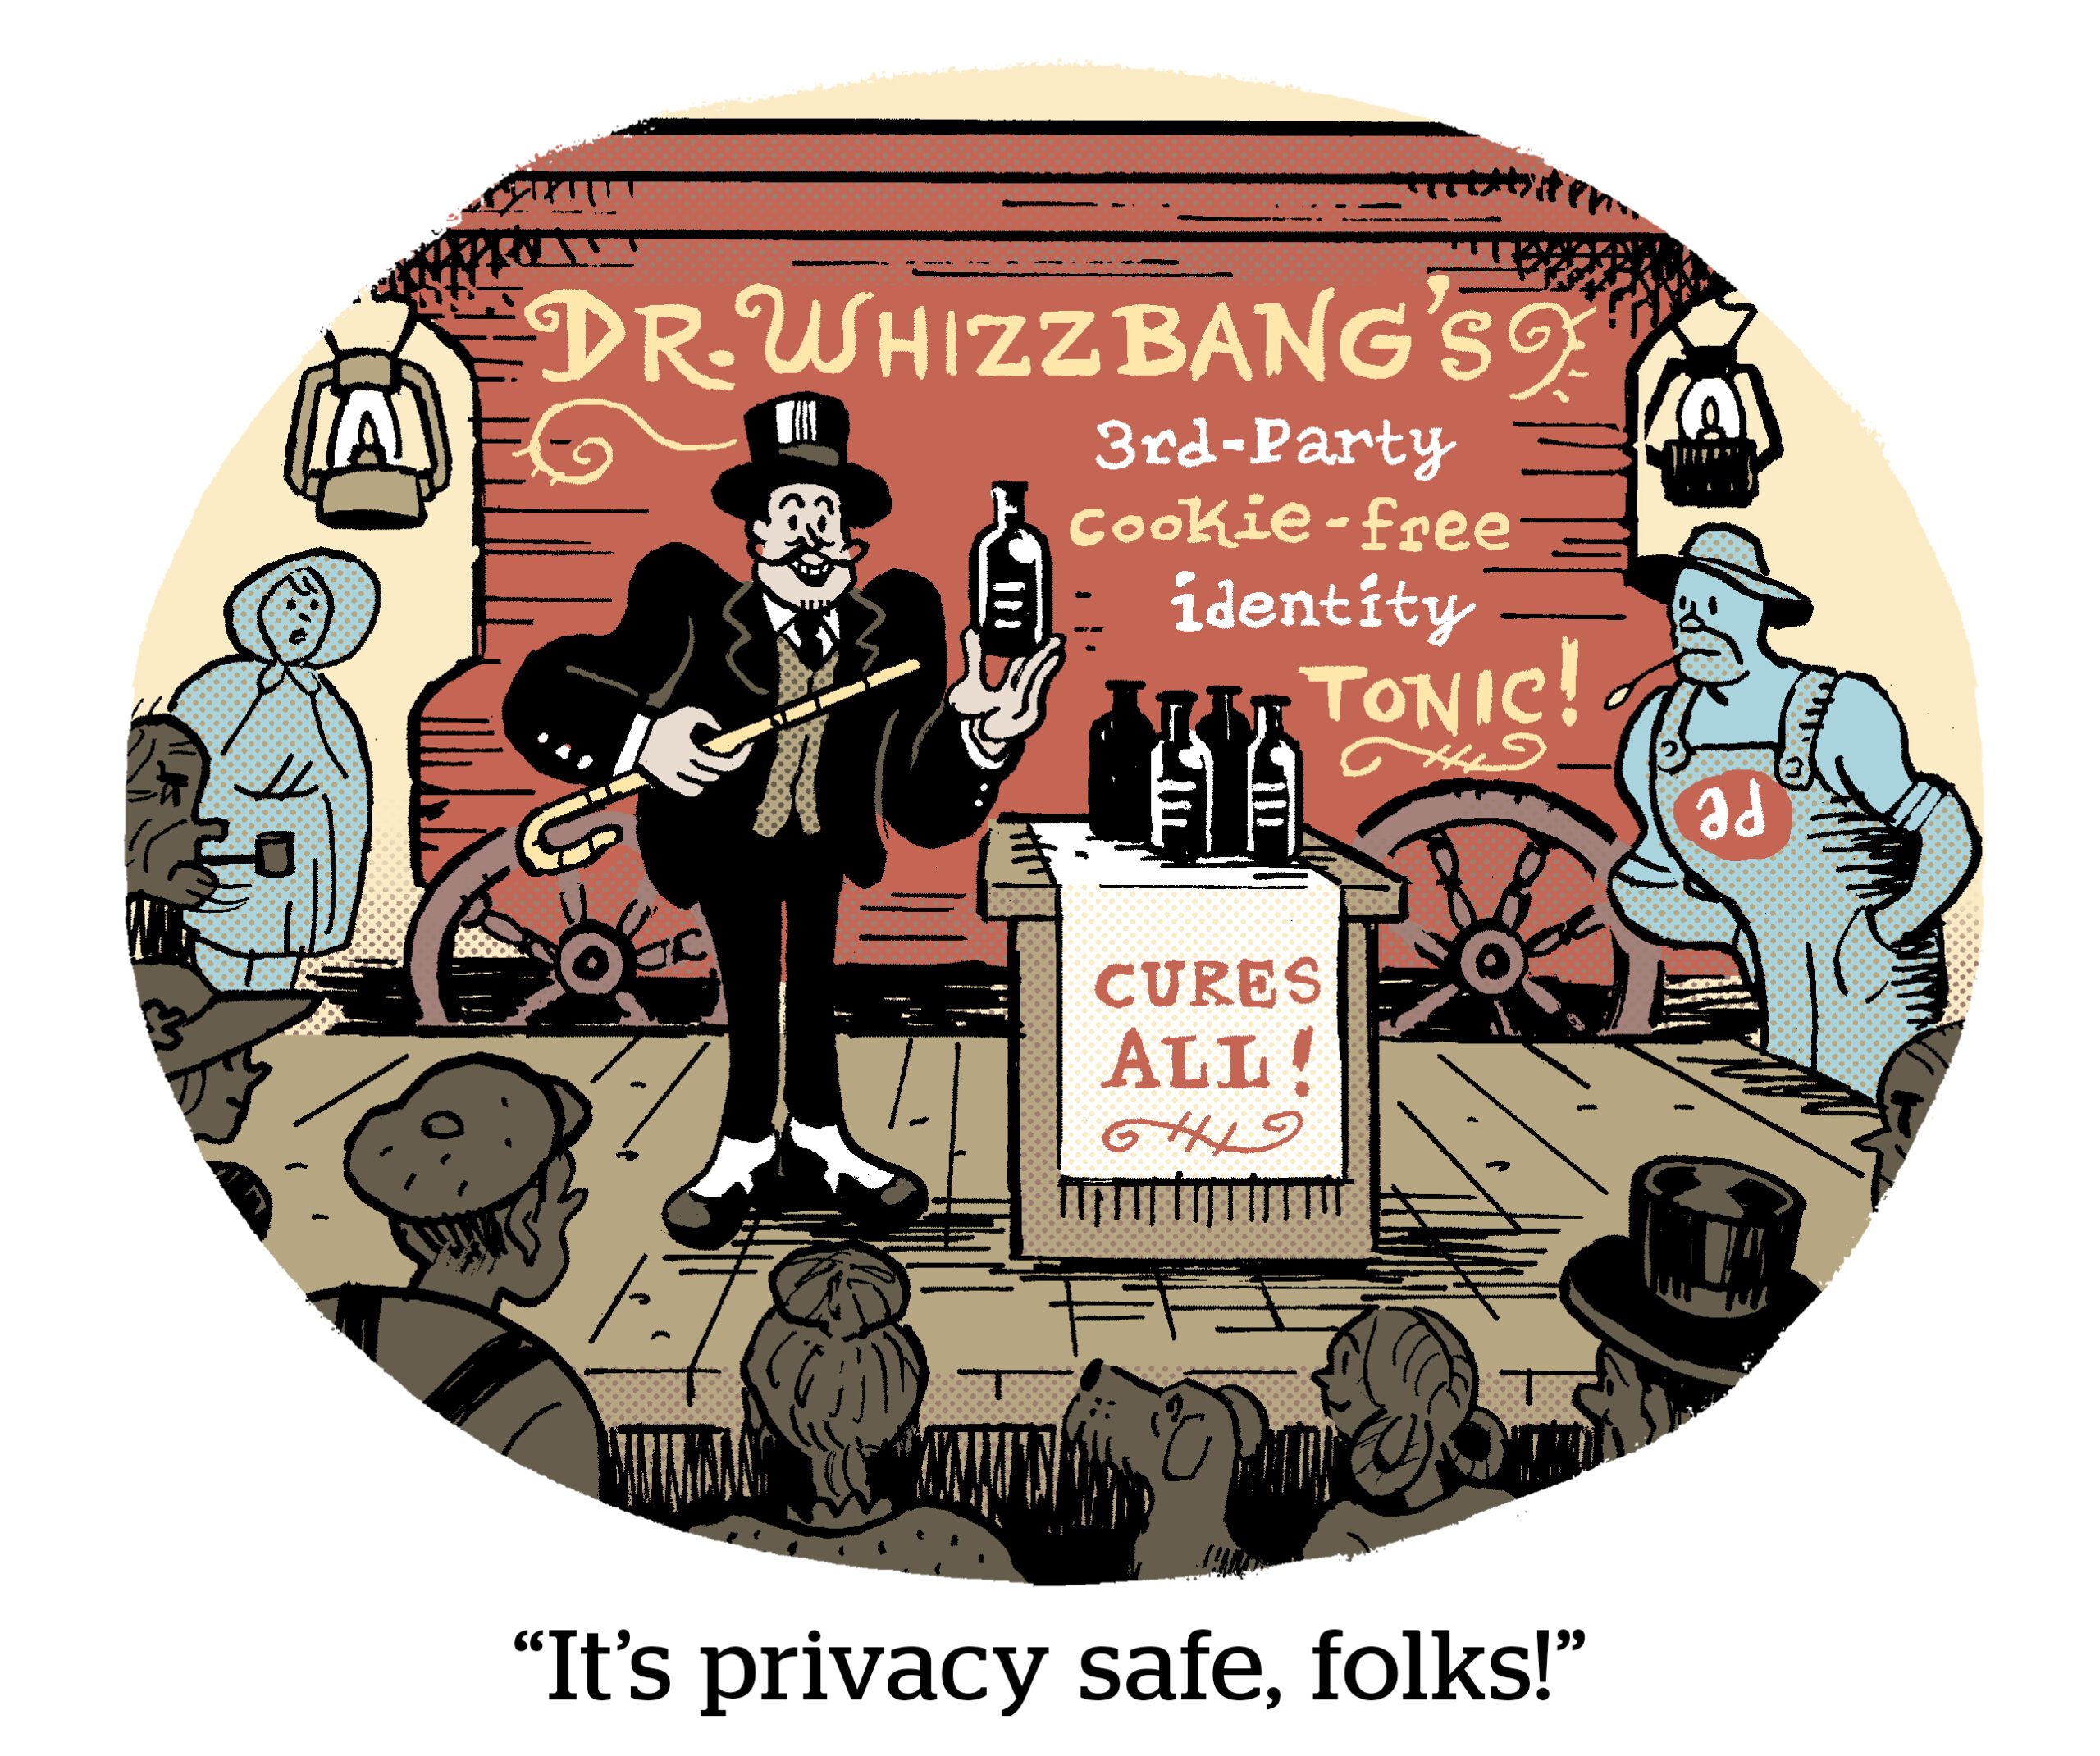 Comic: "It's privacy, safe, folks!"